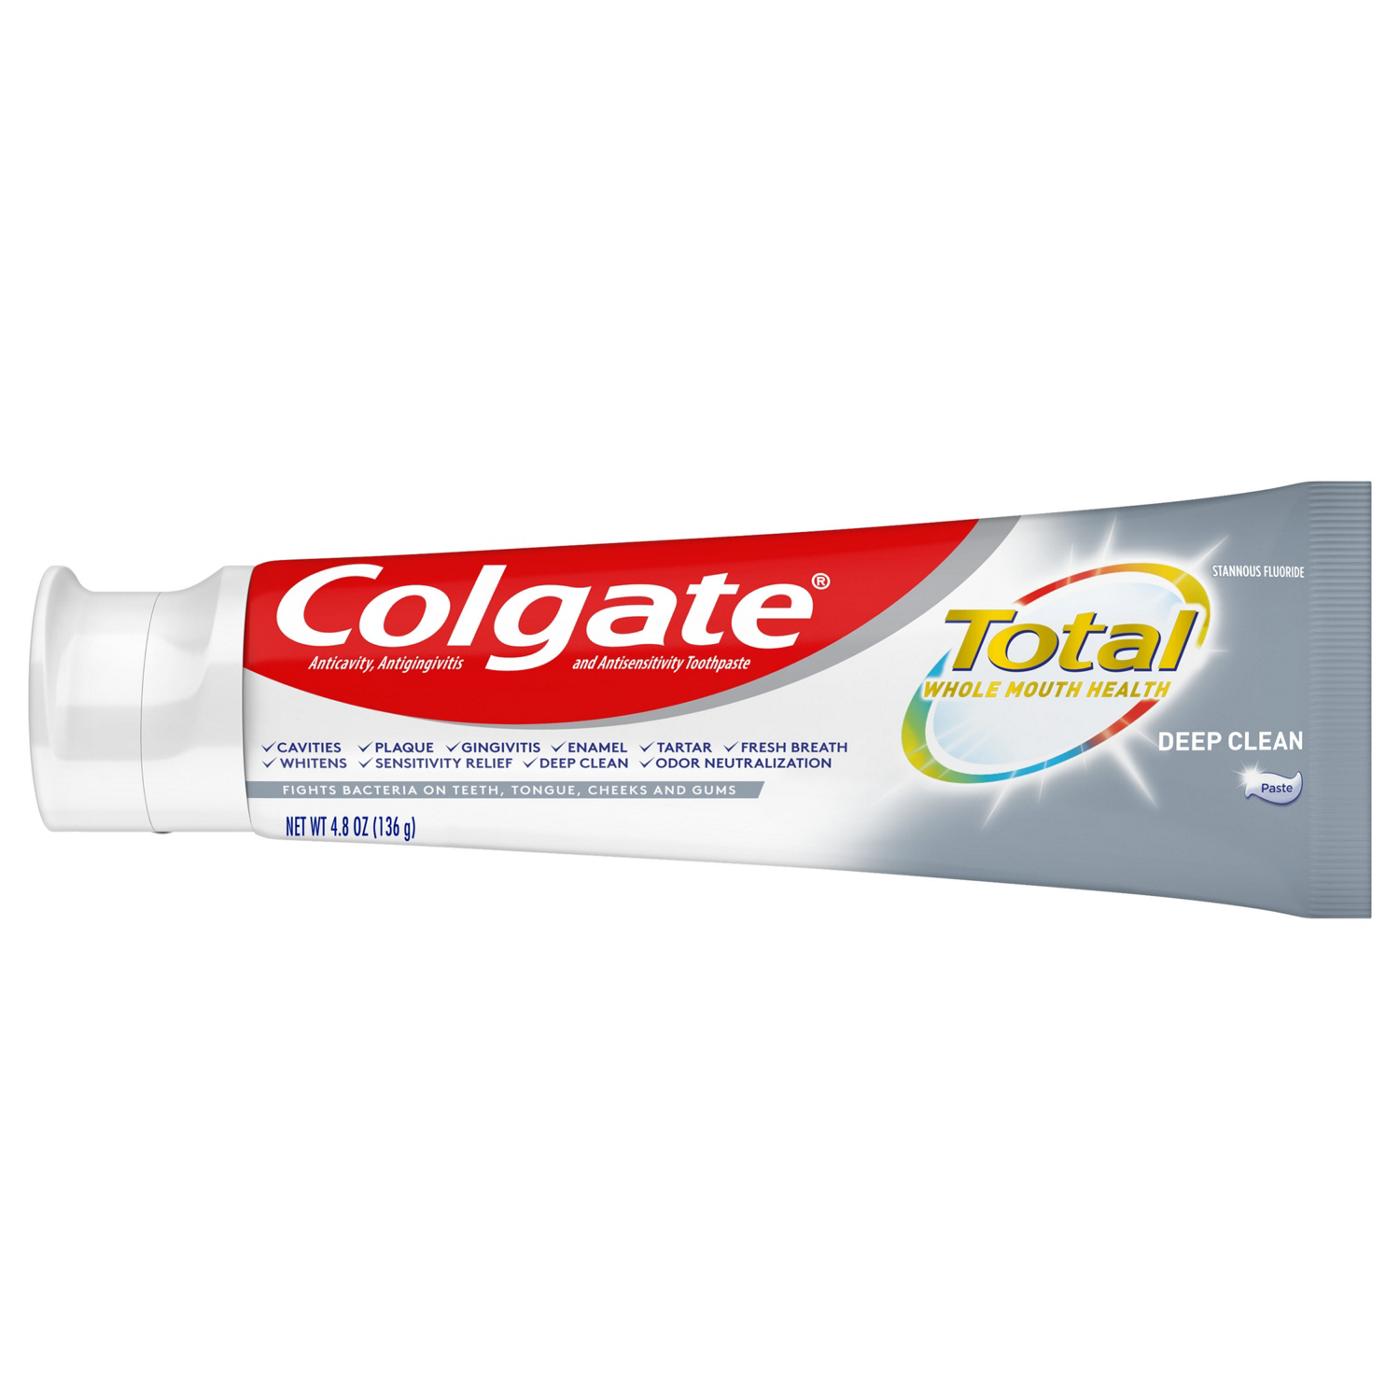 Colgate Total Deep Clean Toothpaste; image 3 of 12